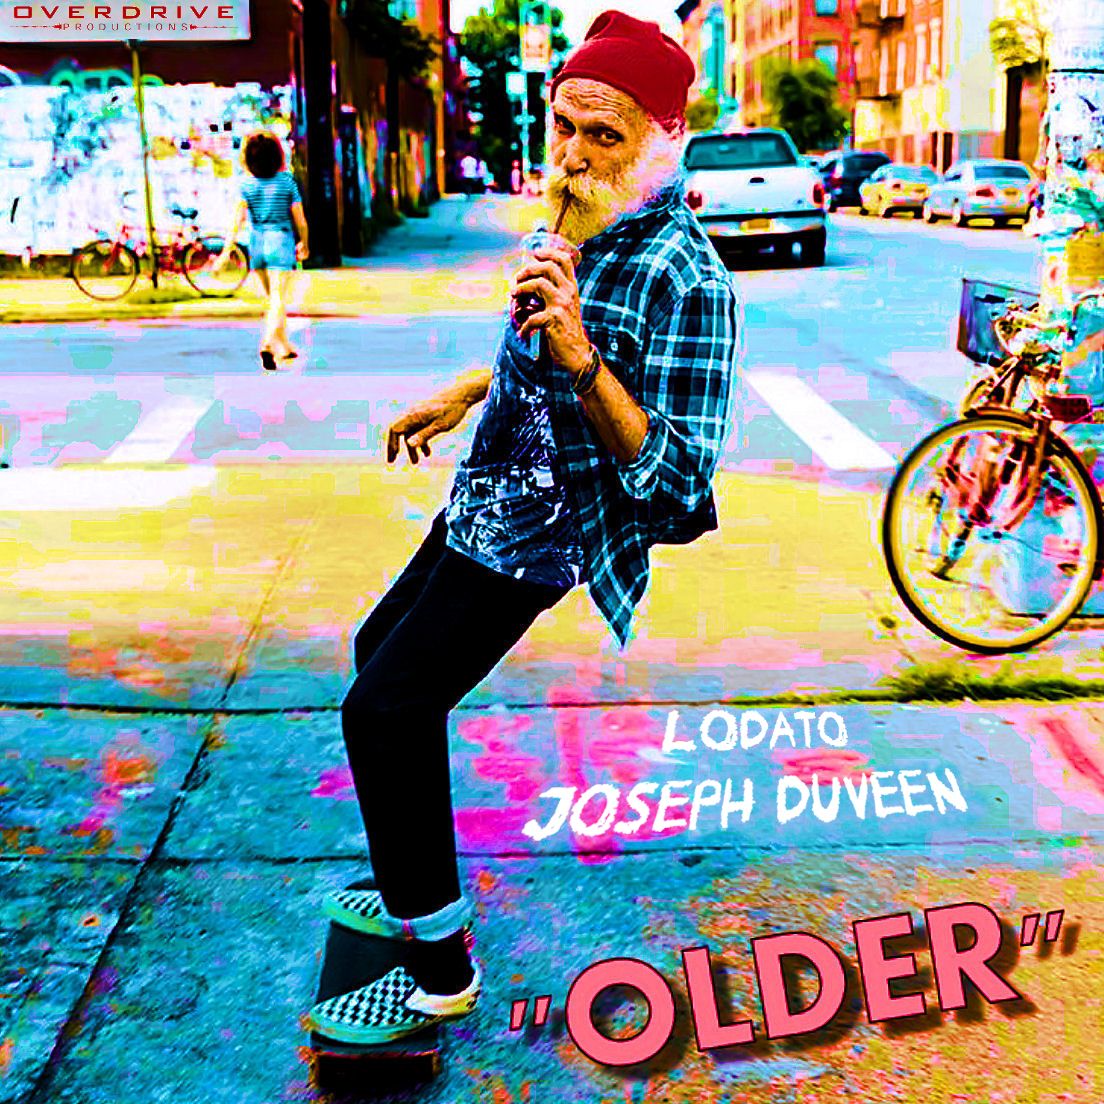 lodato_joseph_duveen_-_older.jpg